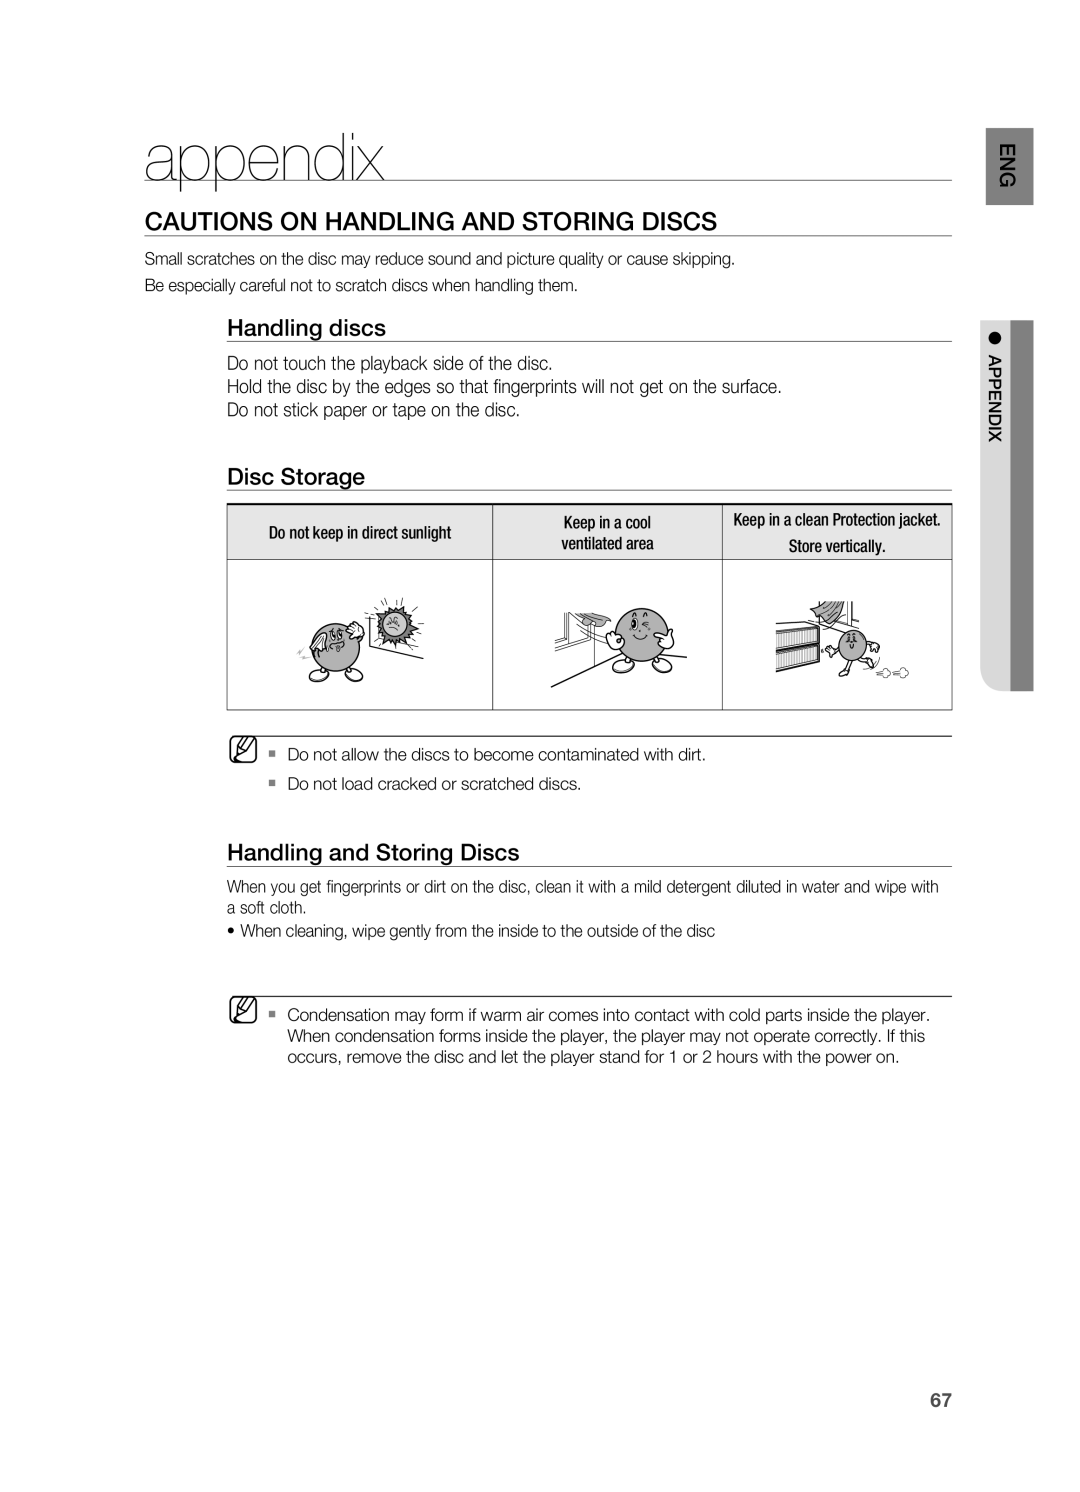 Samsung AH68-02055S manual appendix, Cautions on Handling and Storing Discs, Handling discs, Disc Storage 